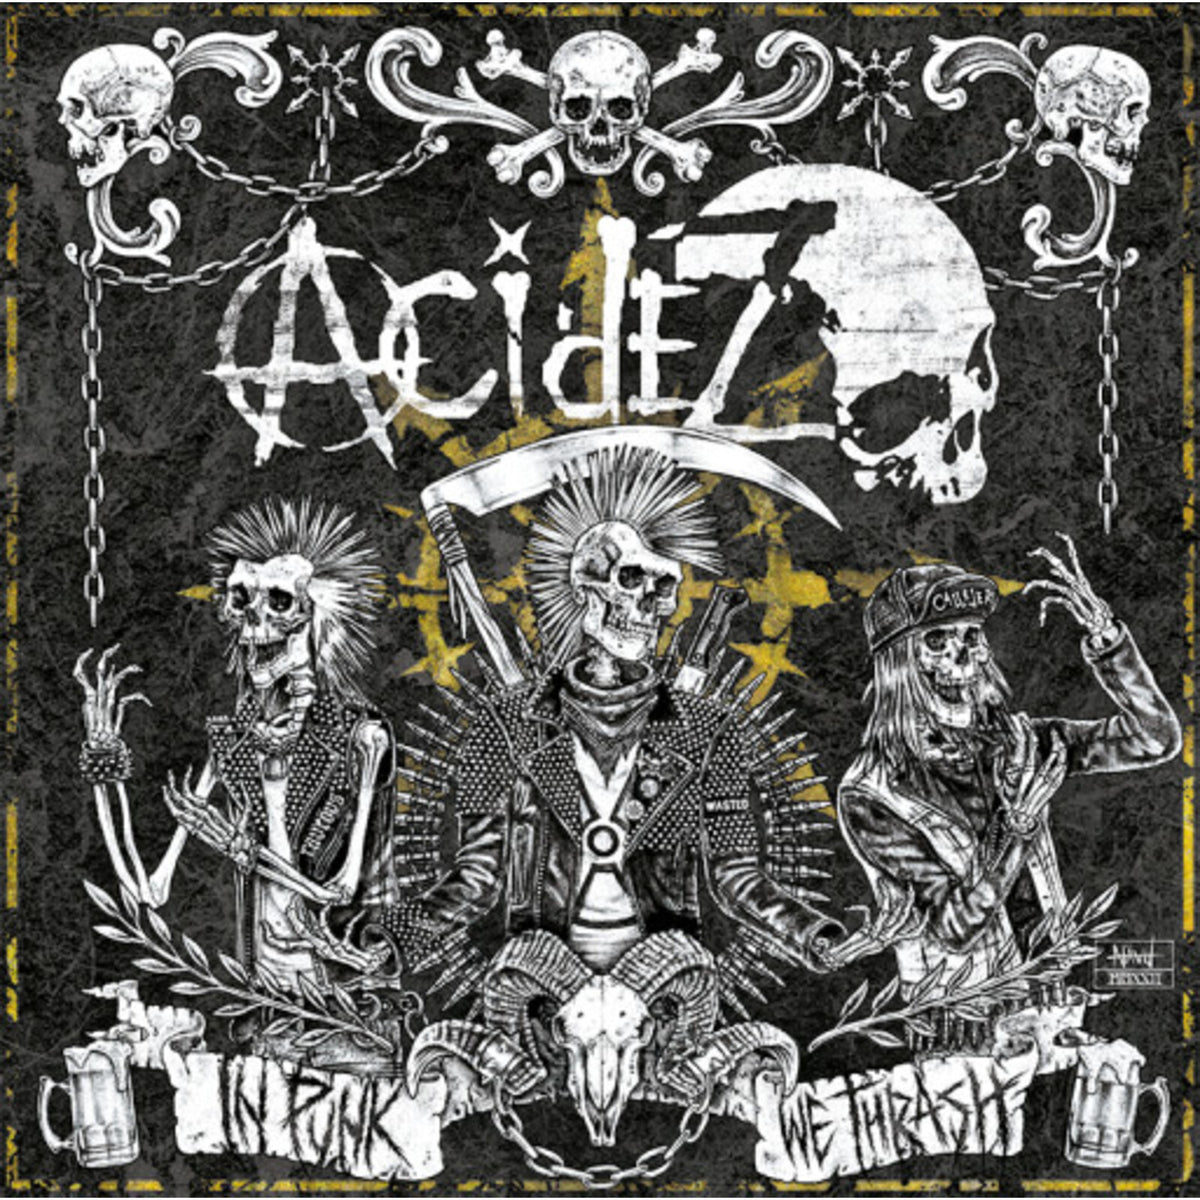 Acidez - In Punk We Thrash - UNRESTCD036